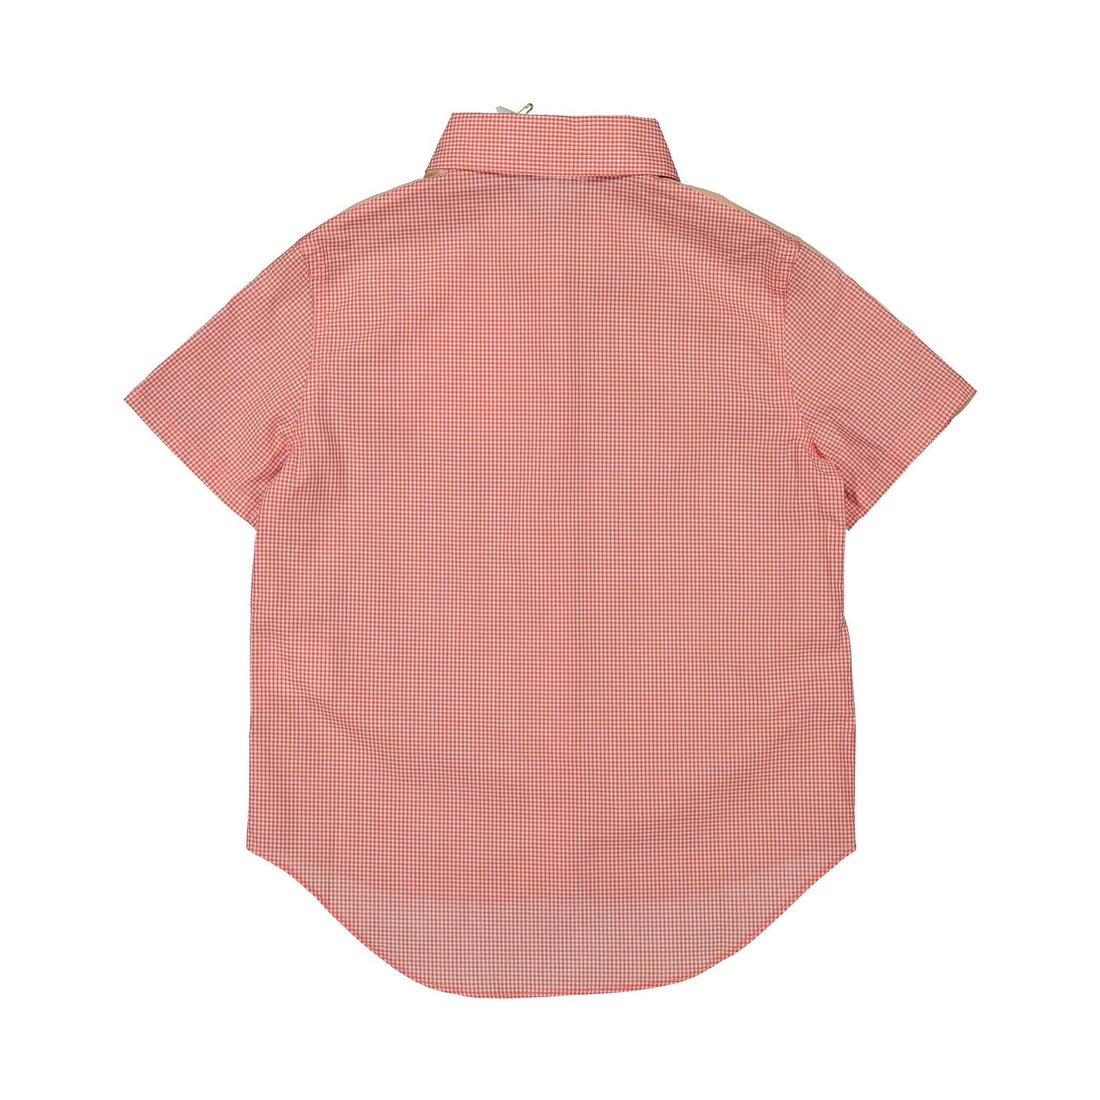 Tia Cibani shirts Tia Cibani Tangerine Classic Snap Shirt